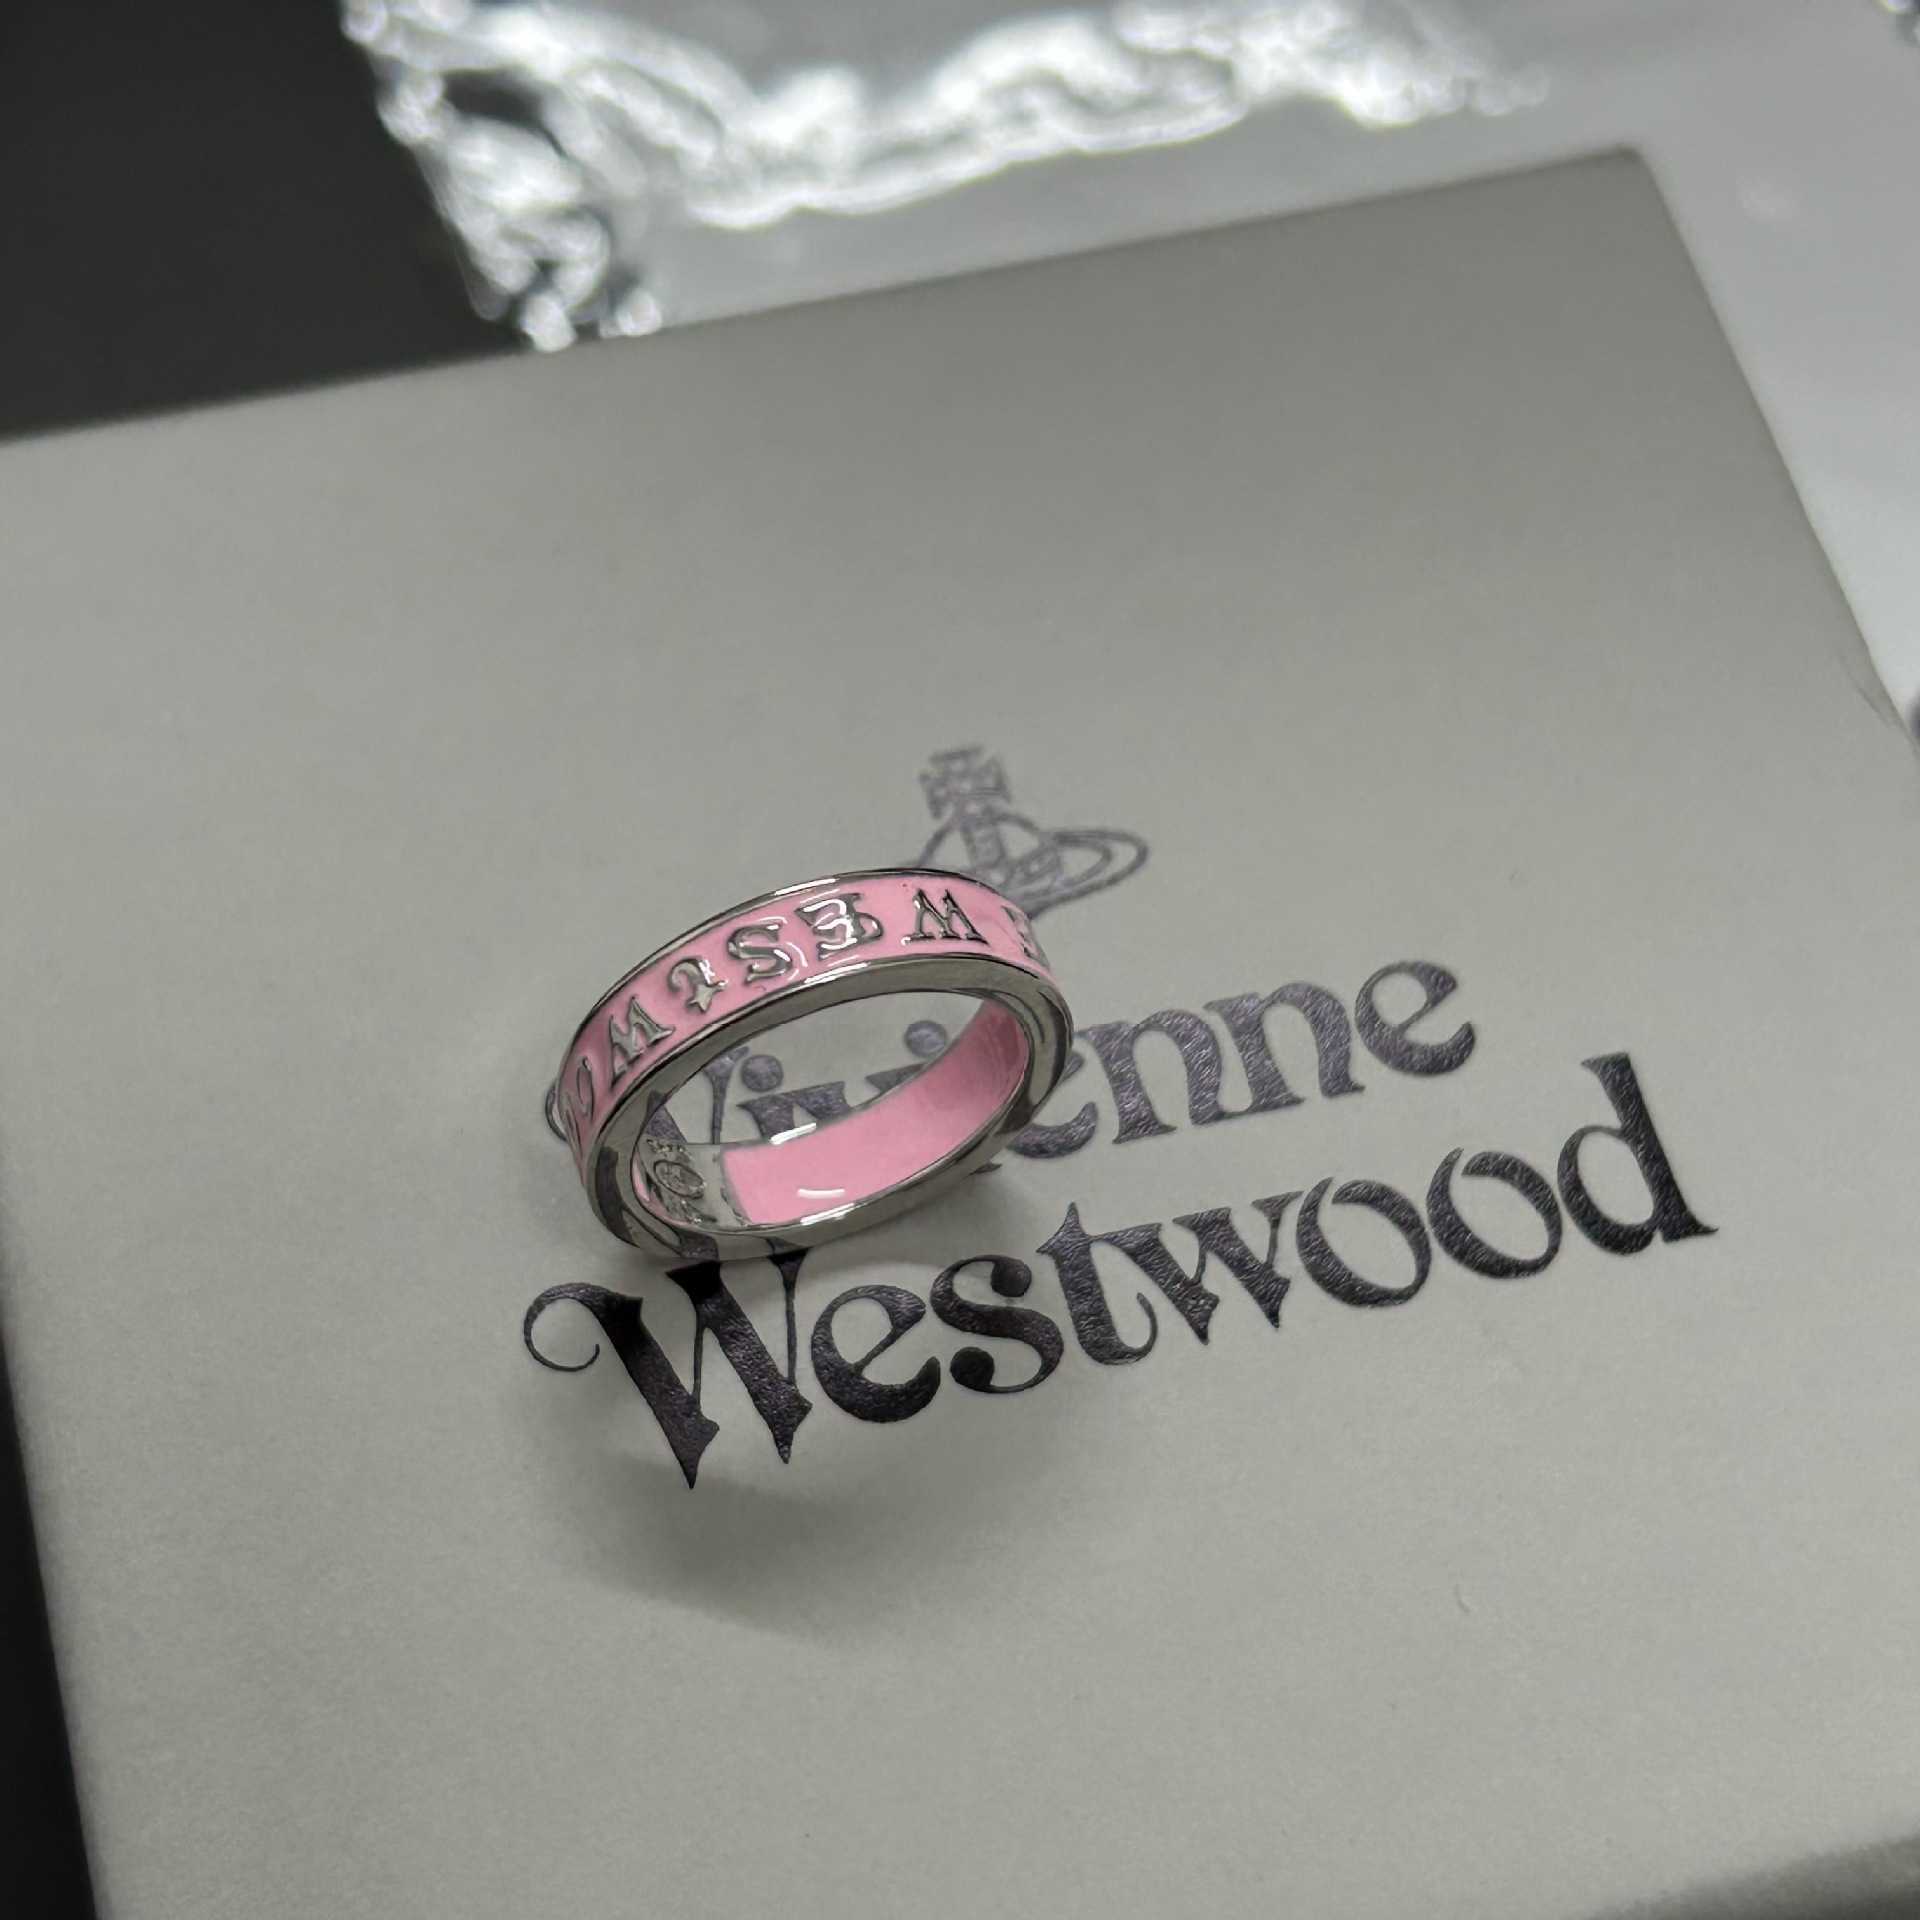 Designer Westwoods esmalte o anel de letra simples e de ponta, casal multicolorido unhas lisadas